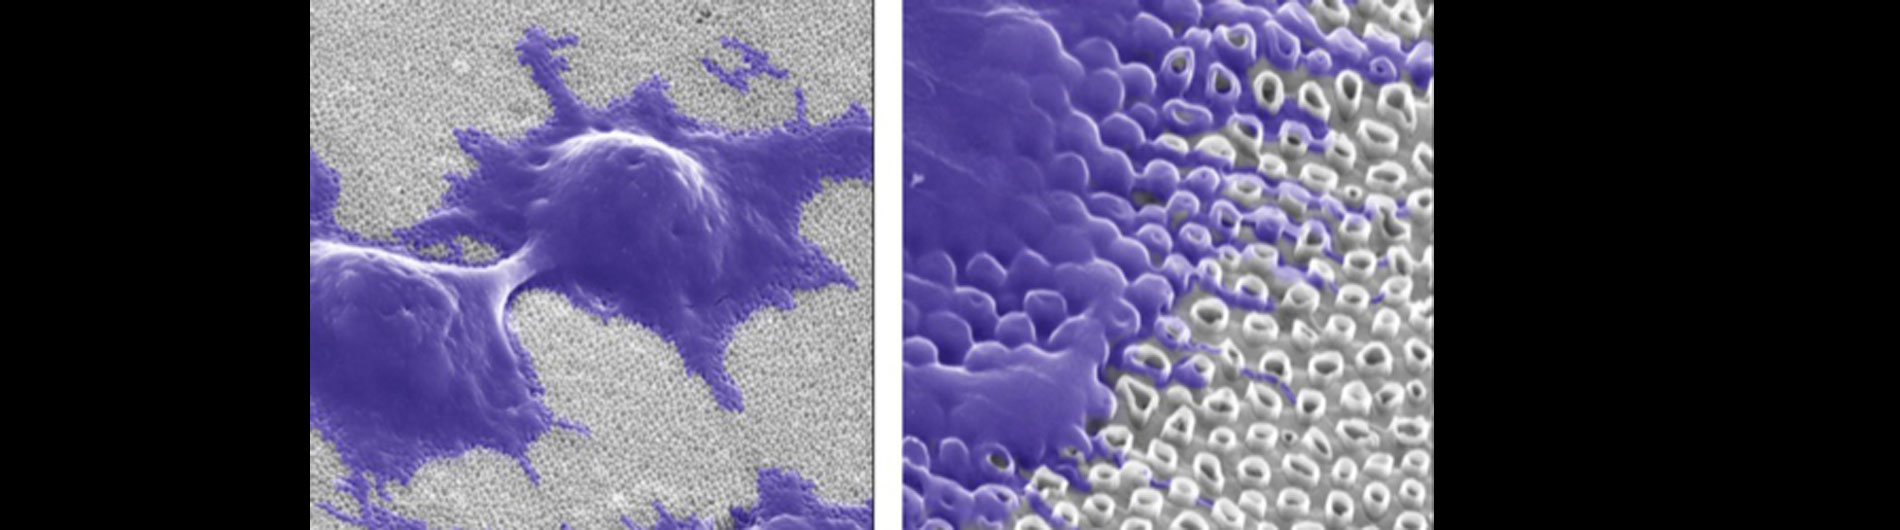 Dickerson Research - Carbon Nanotubes1